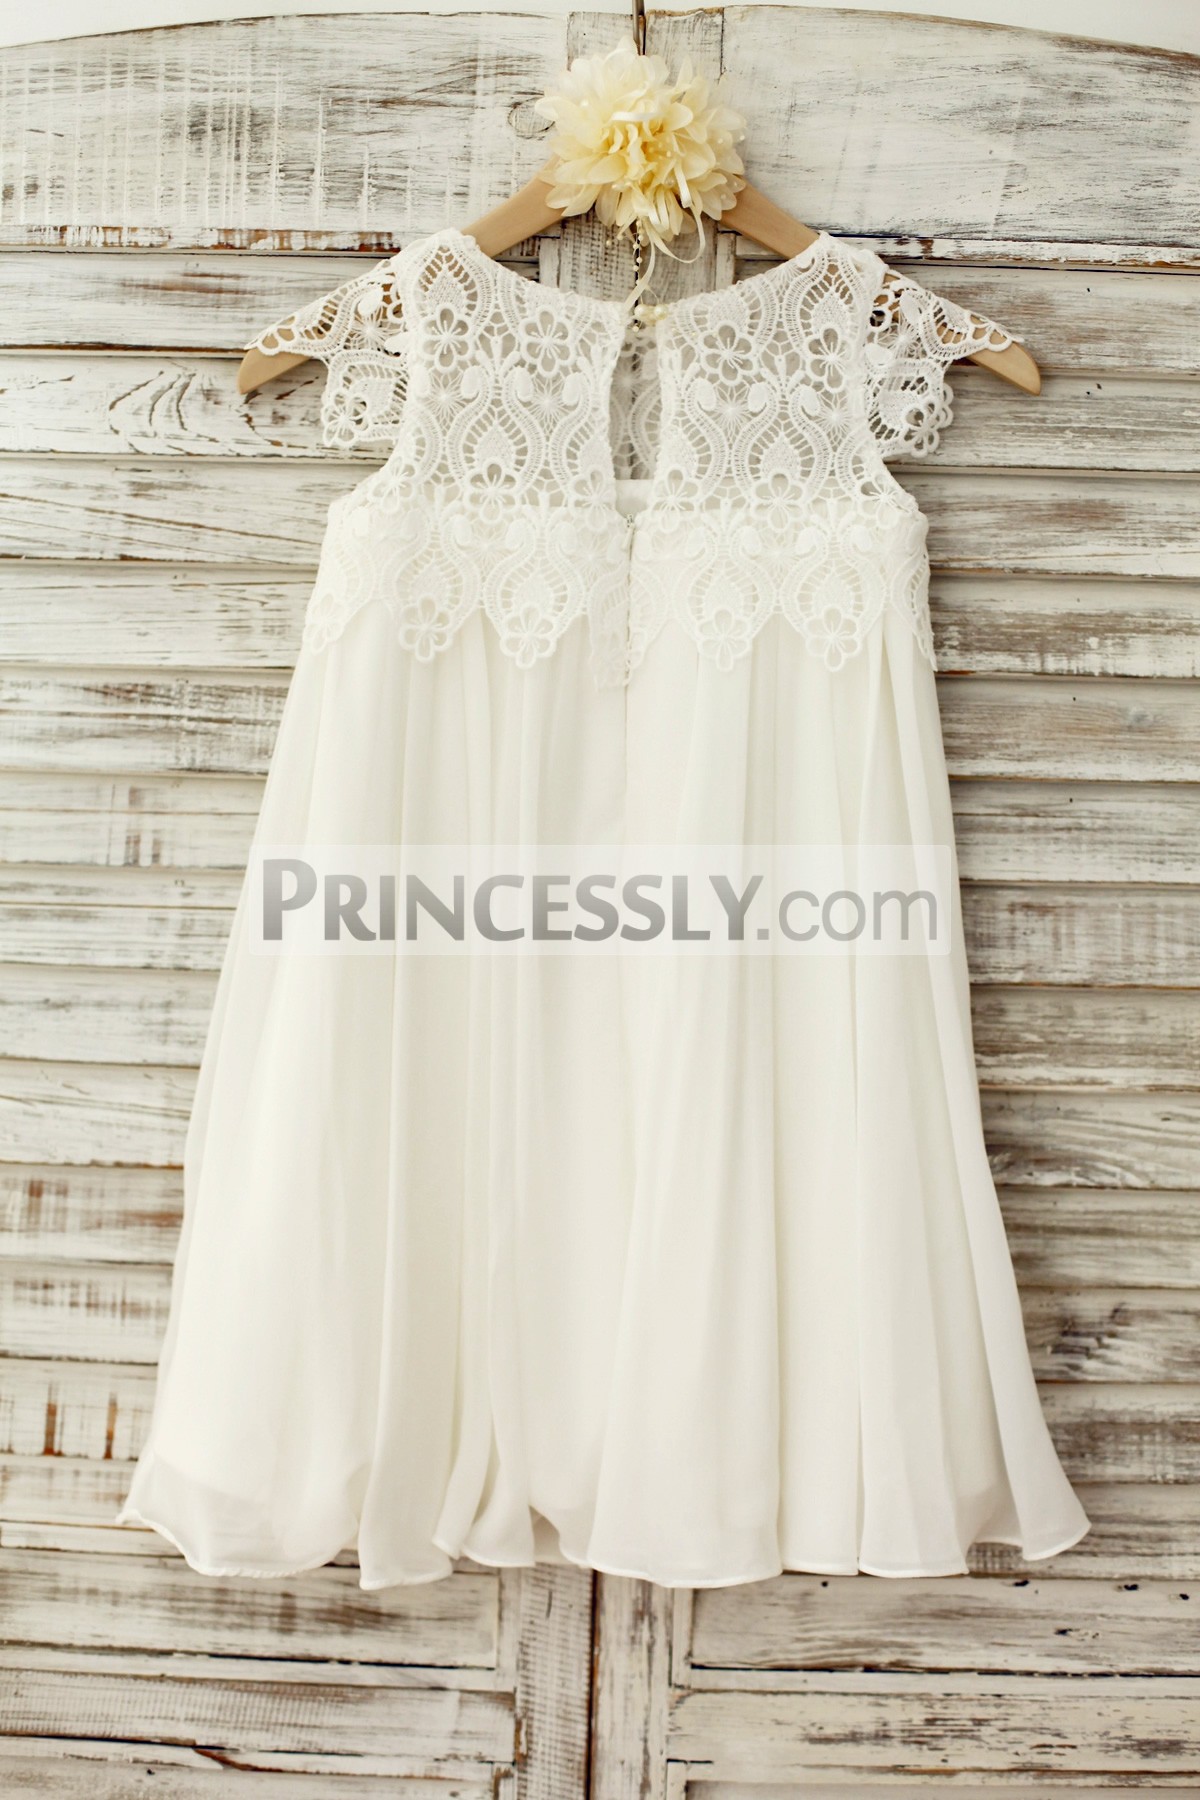 Ivory crochet lace pleated flower chiffon wedding baby girl dress